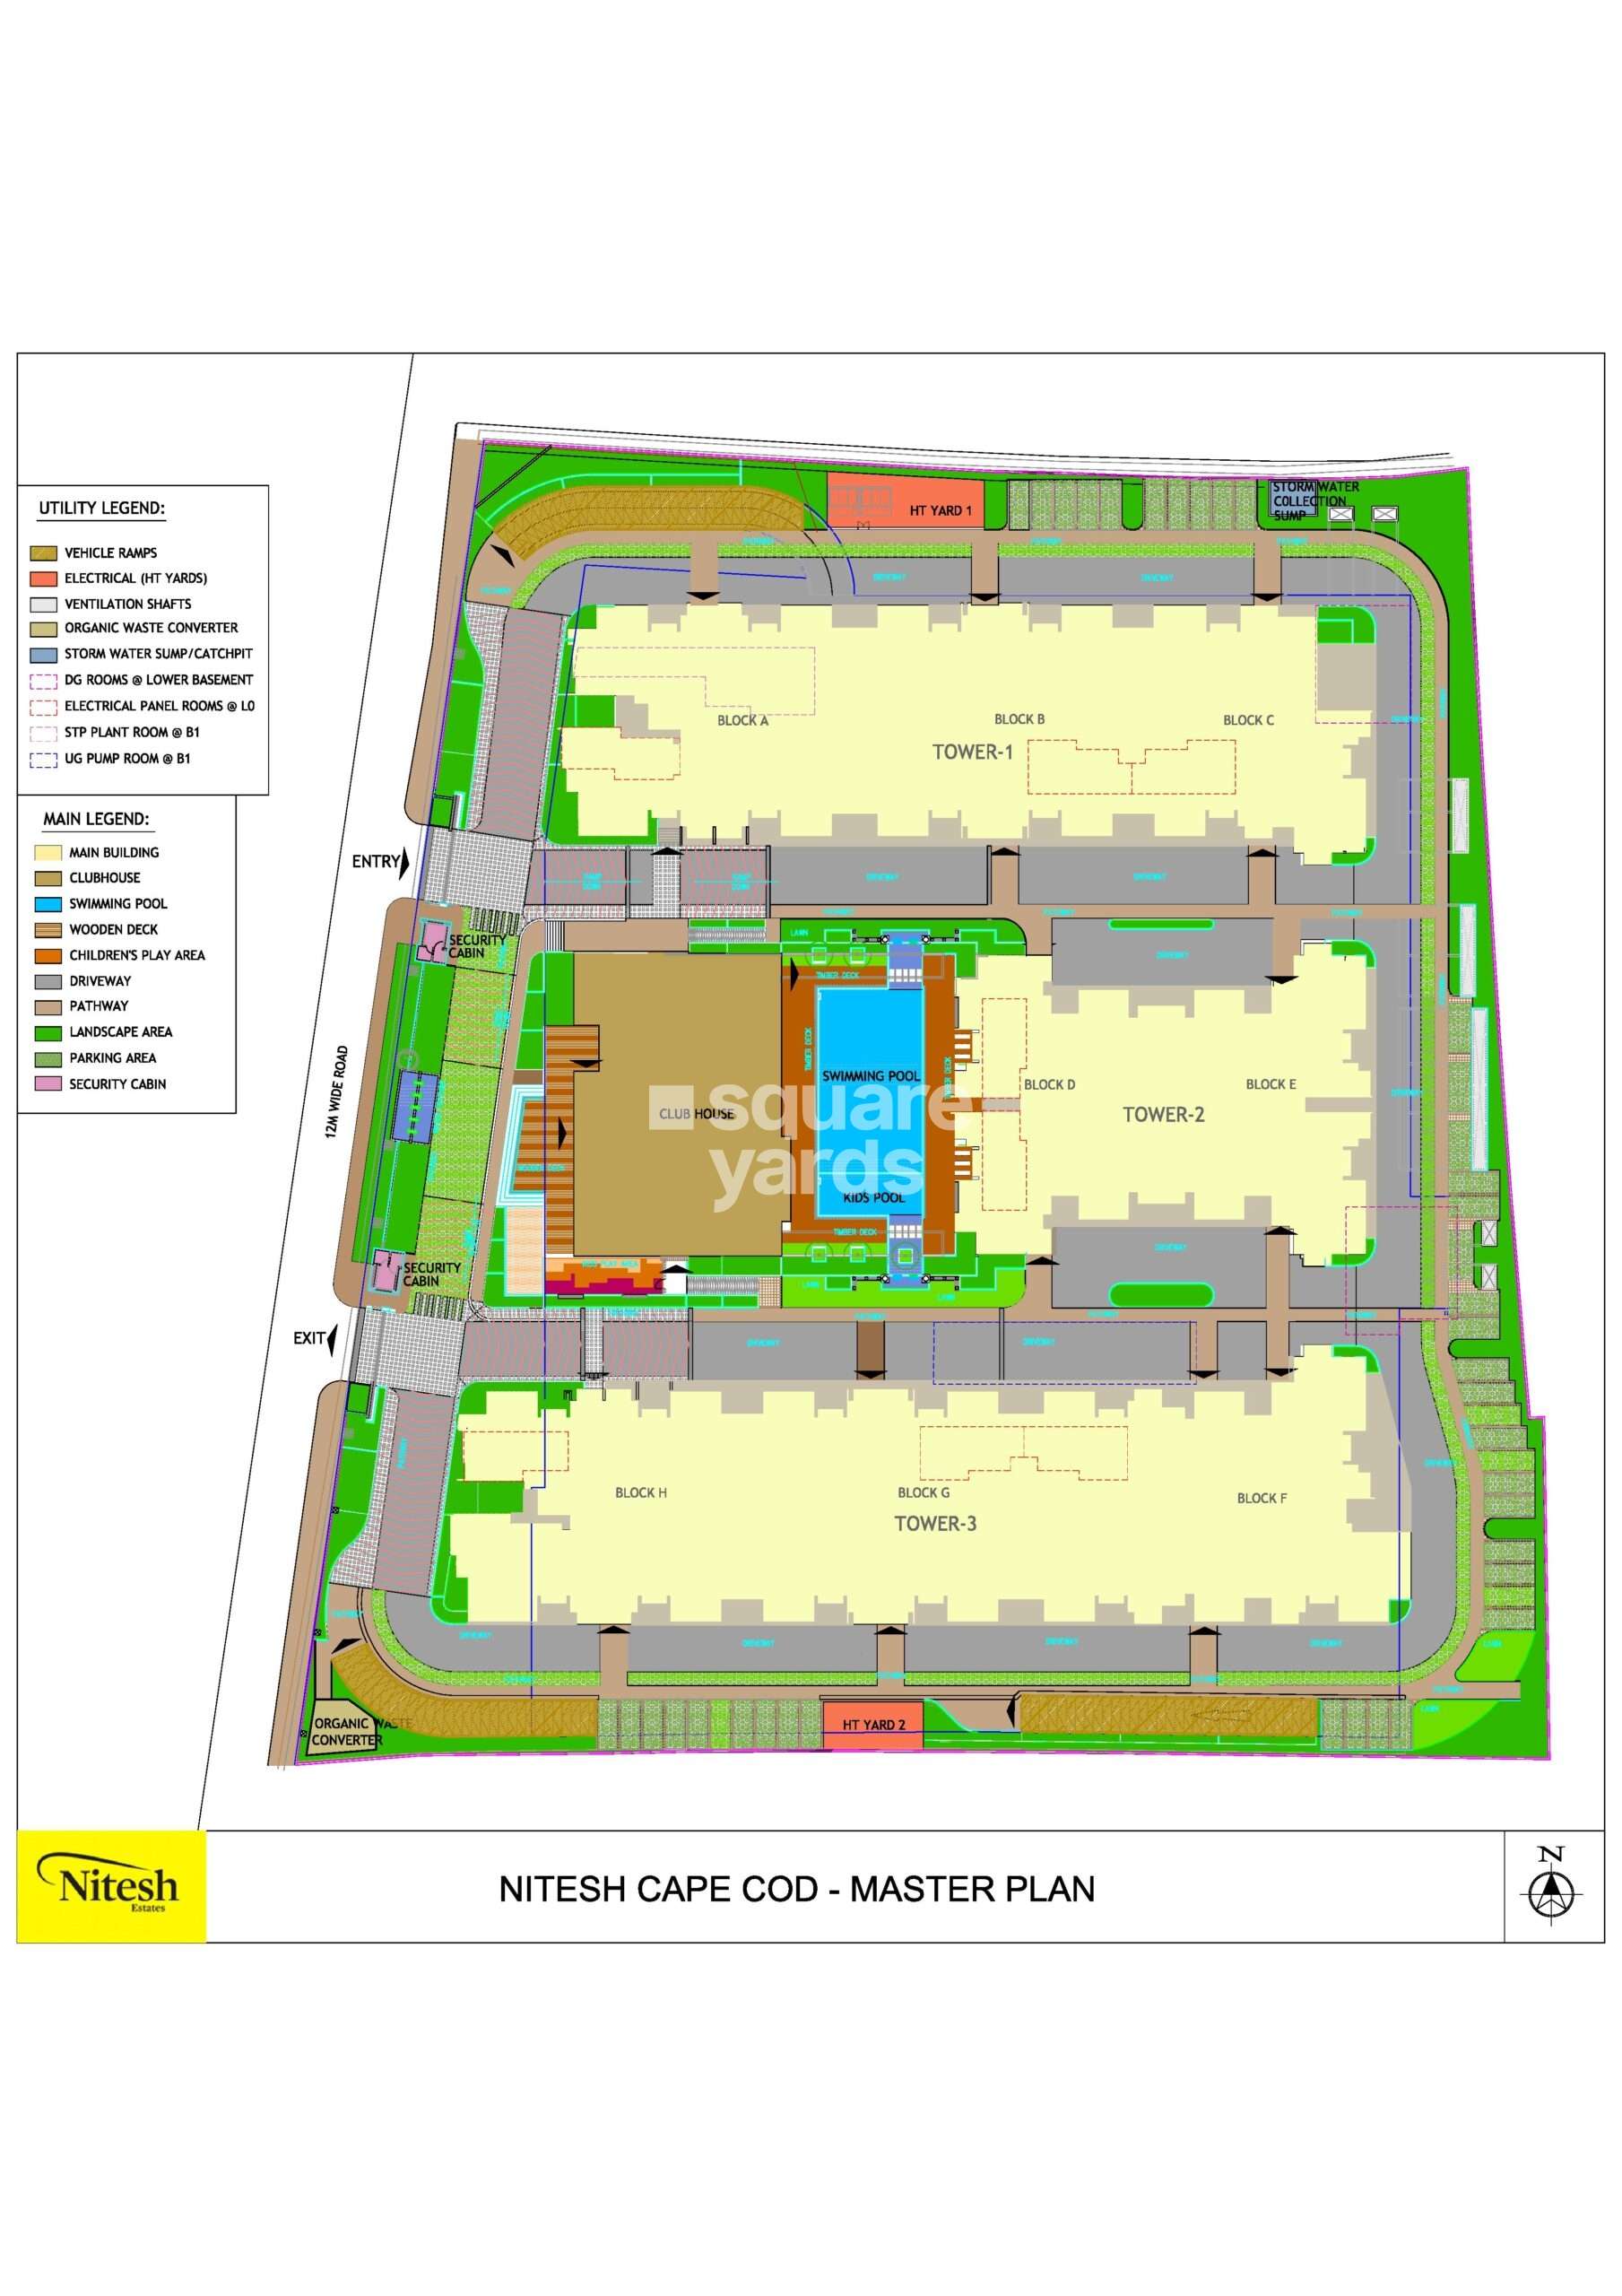 nitesh cape cod project master plan image1